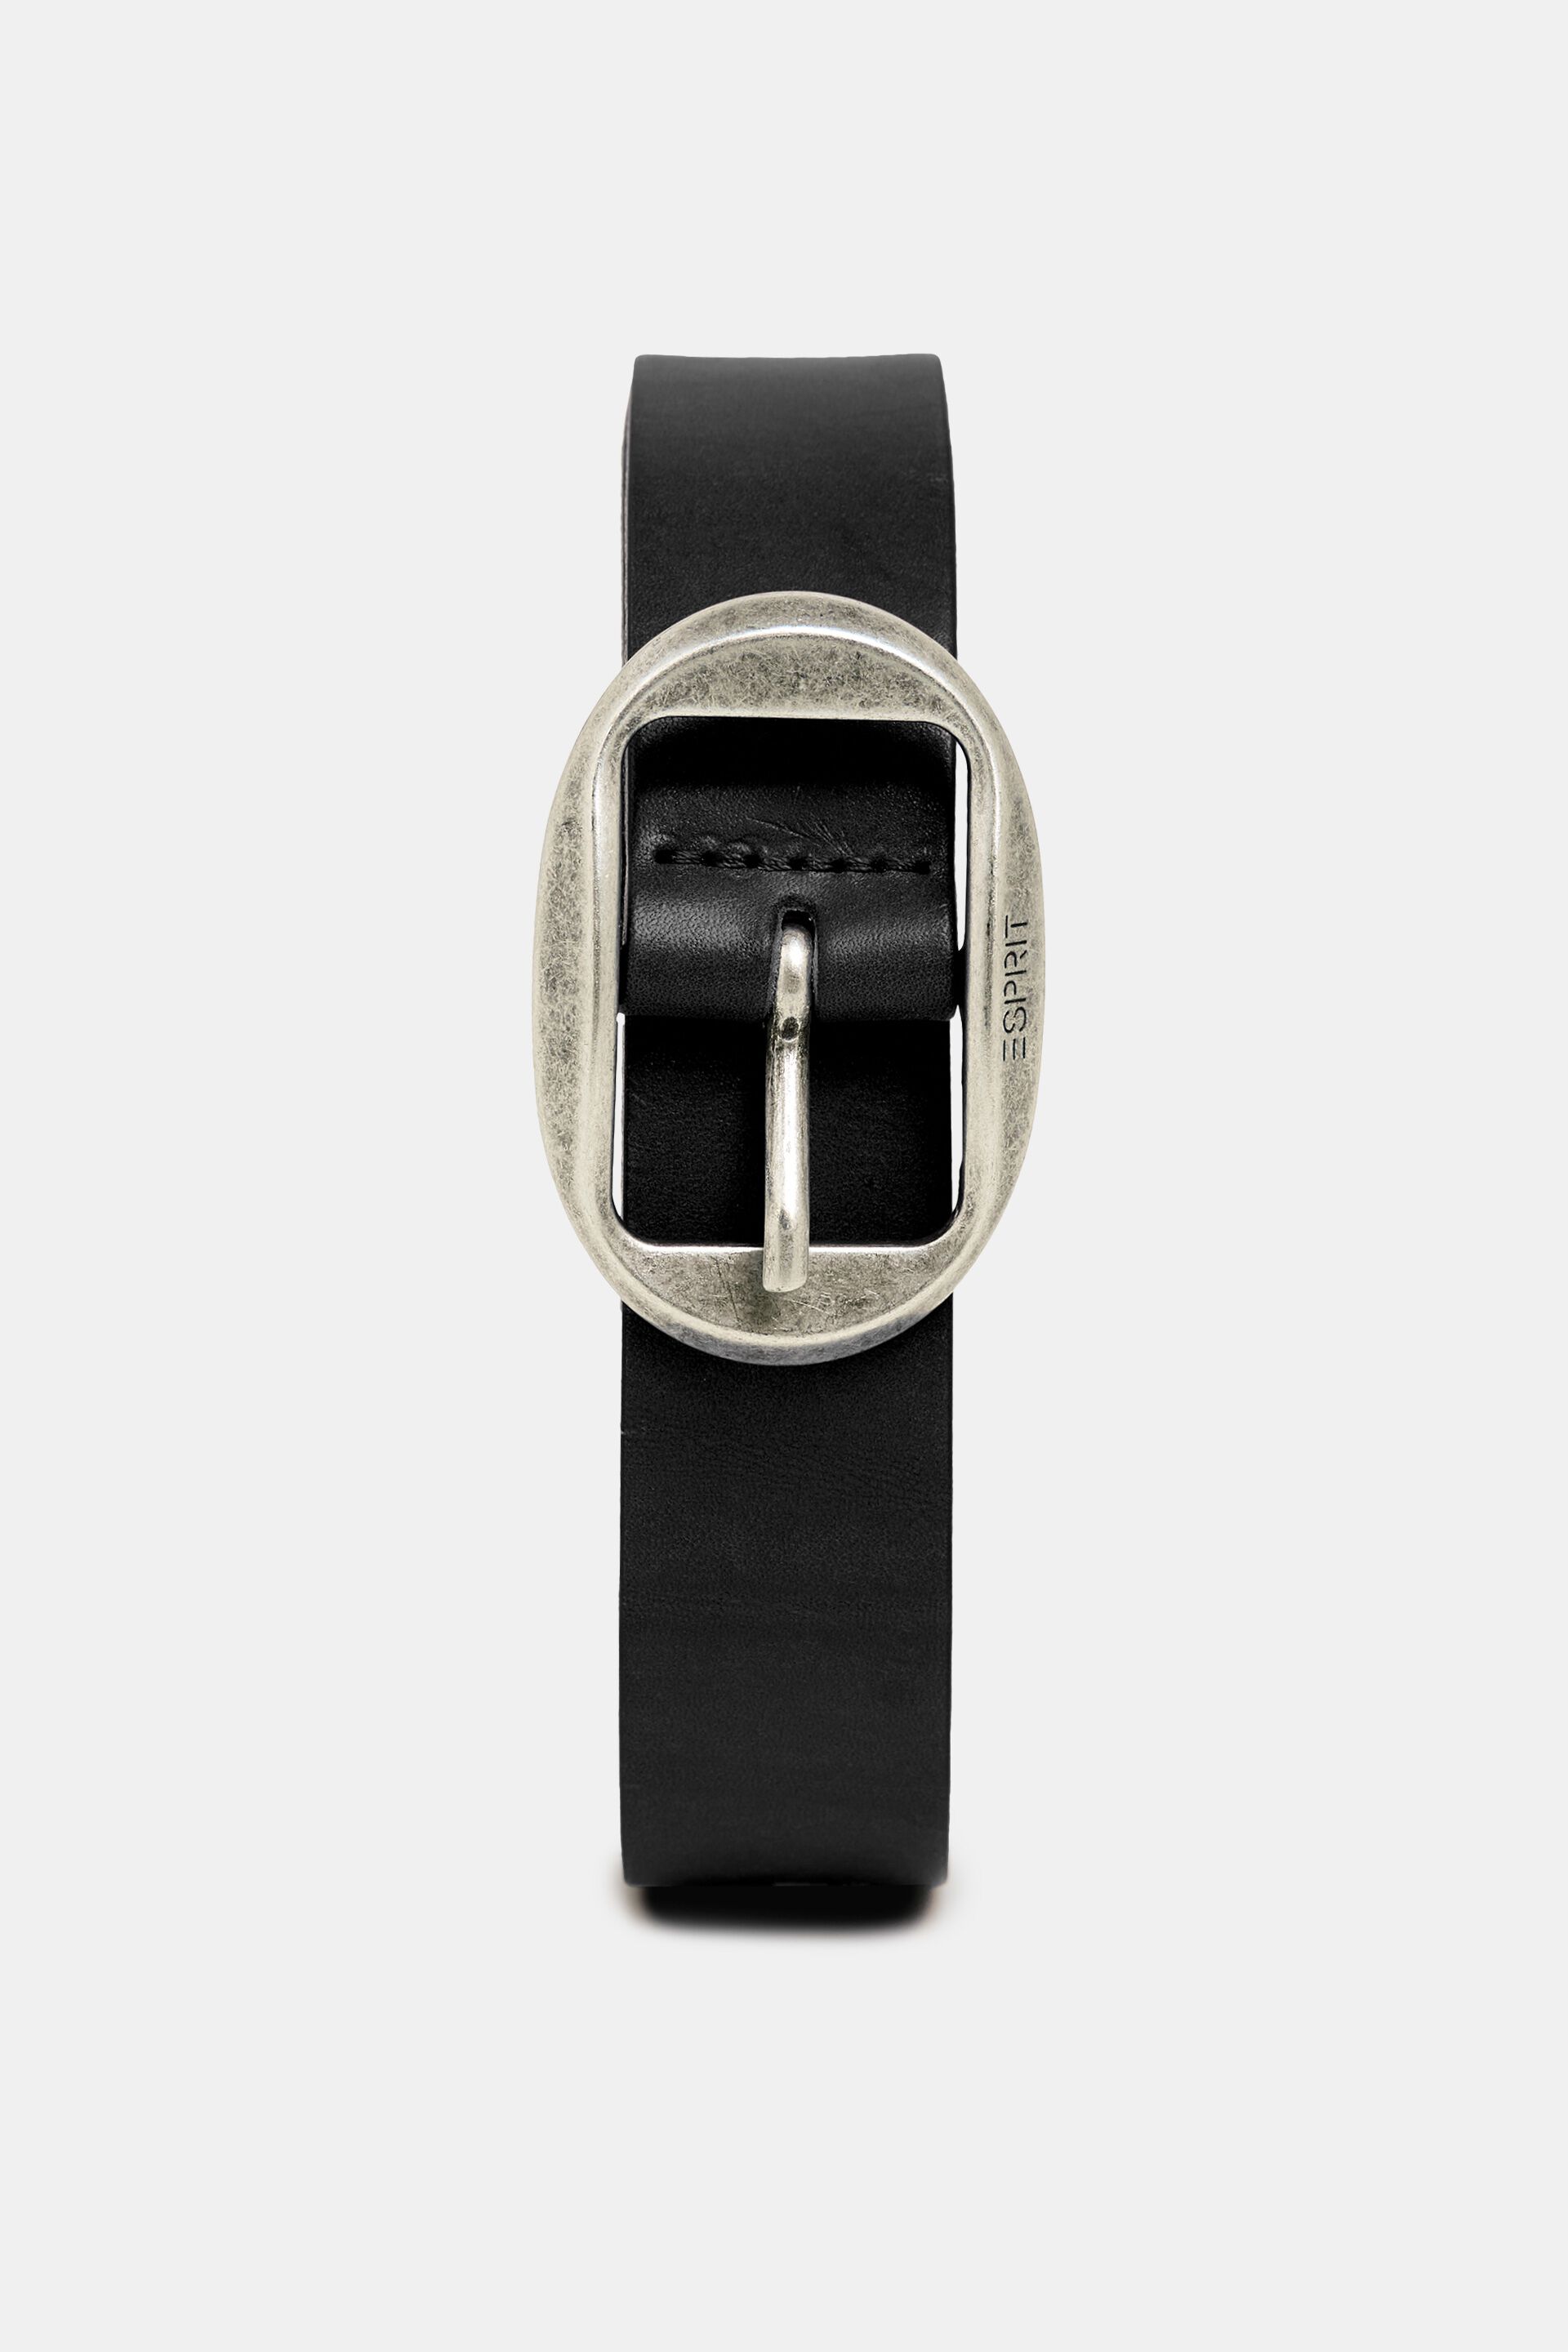 Esprit buckle belt a Leather with vintage